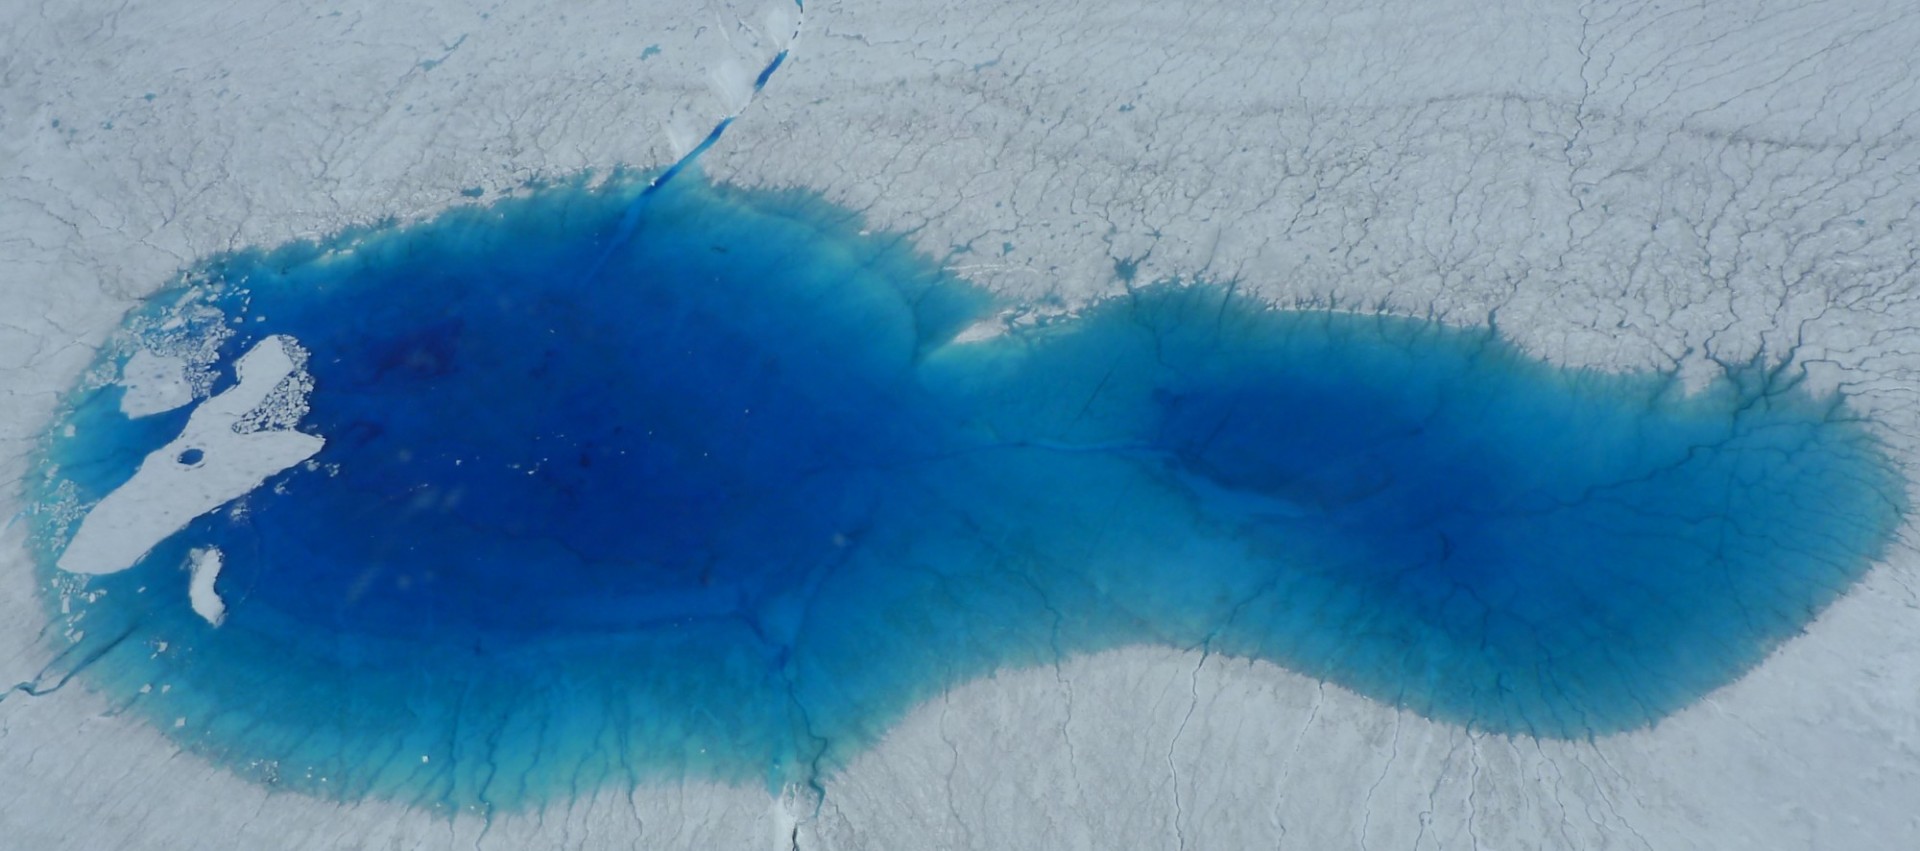 Greenland Surface Lake 